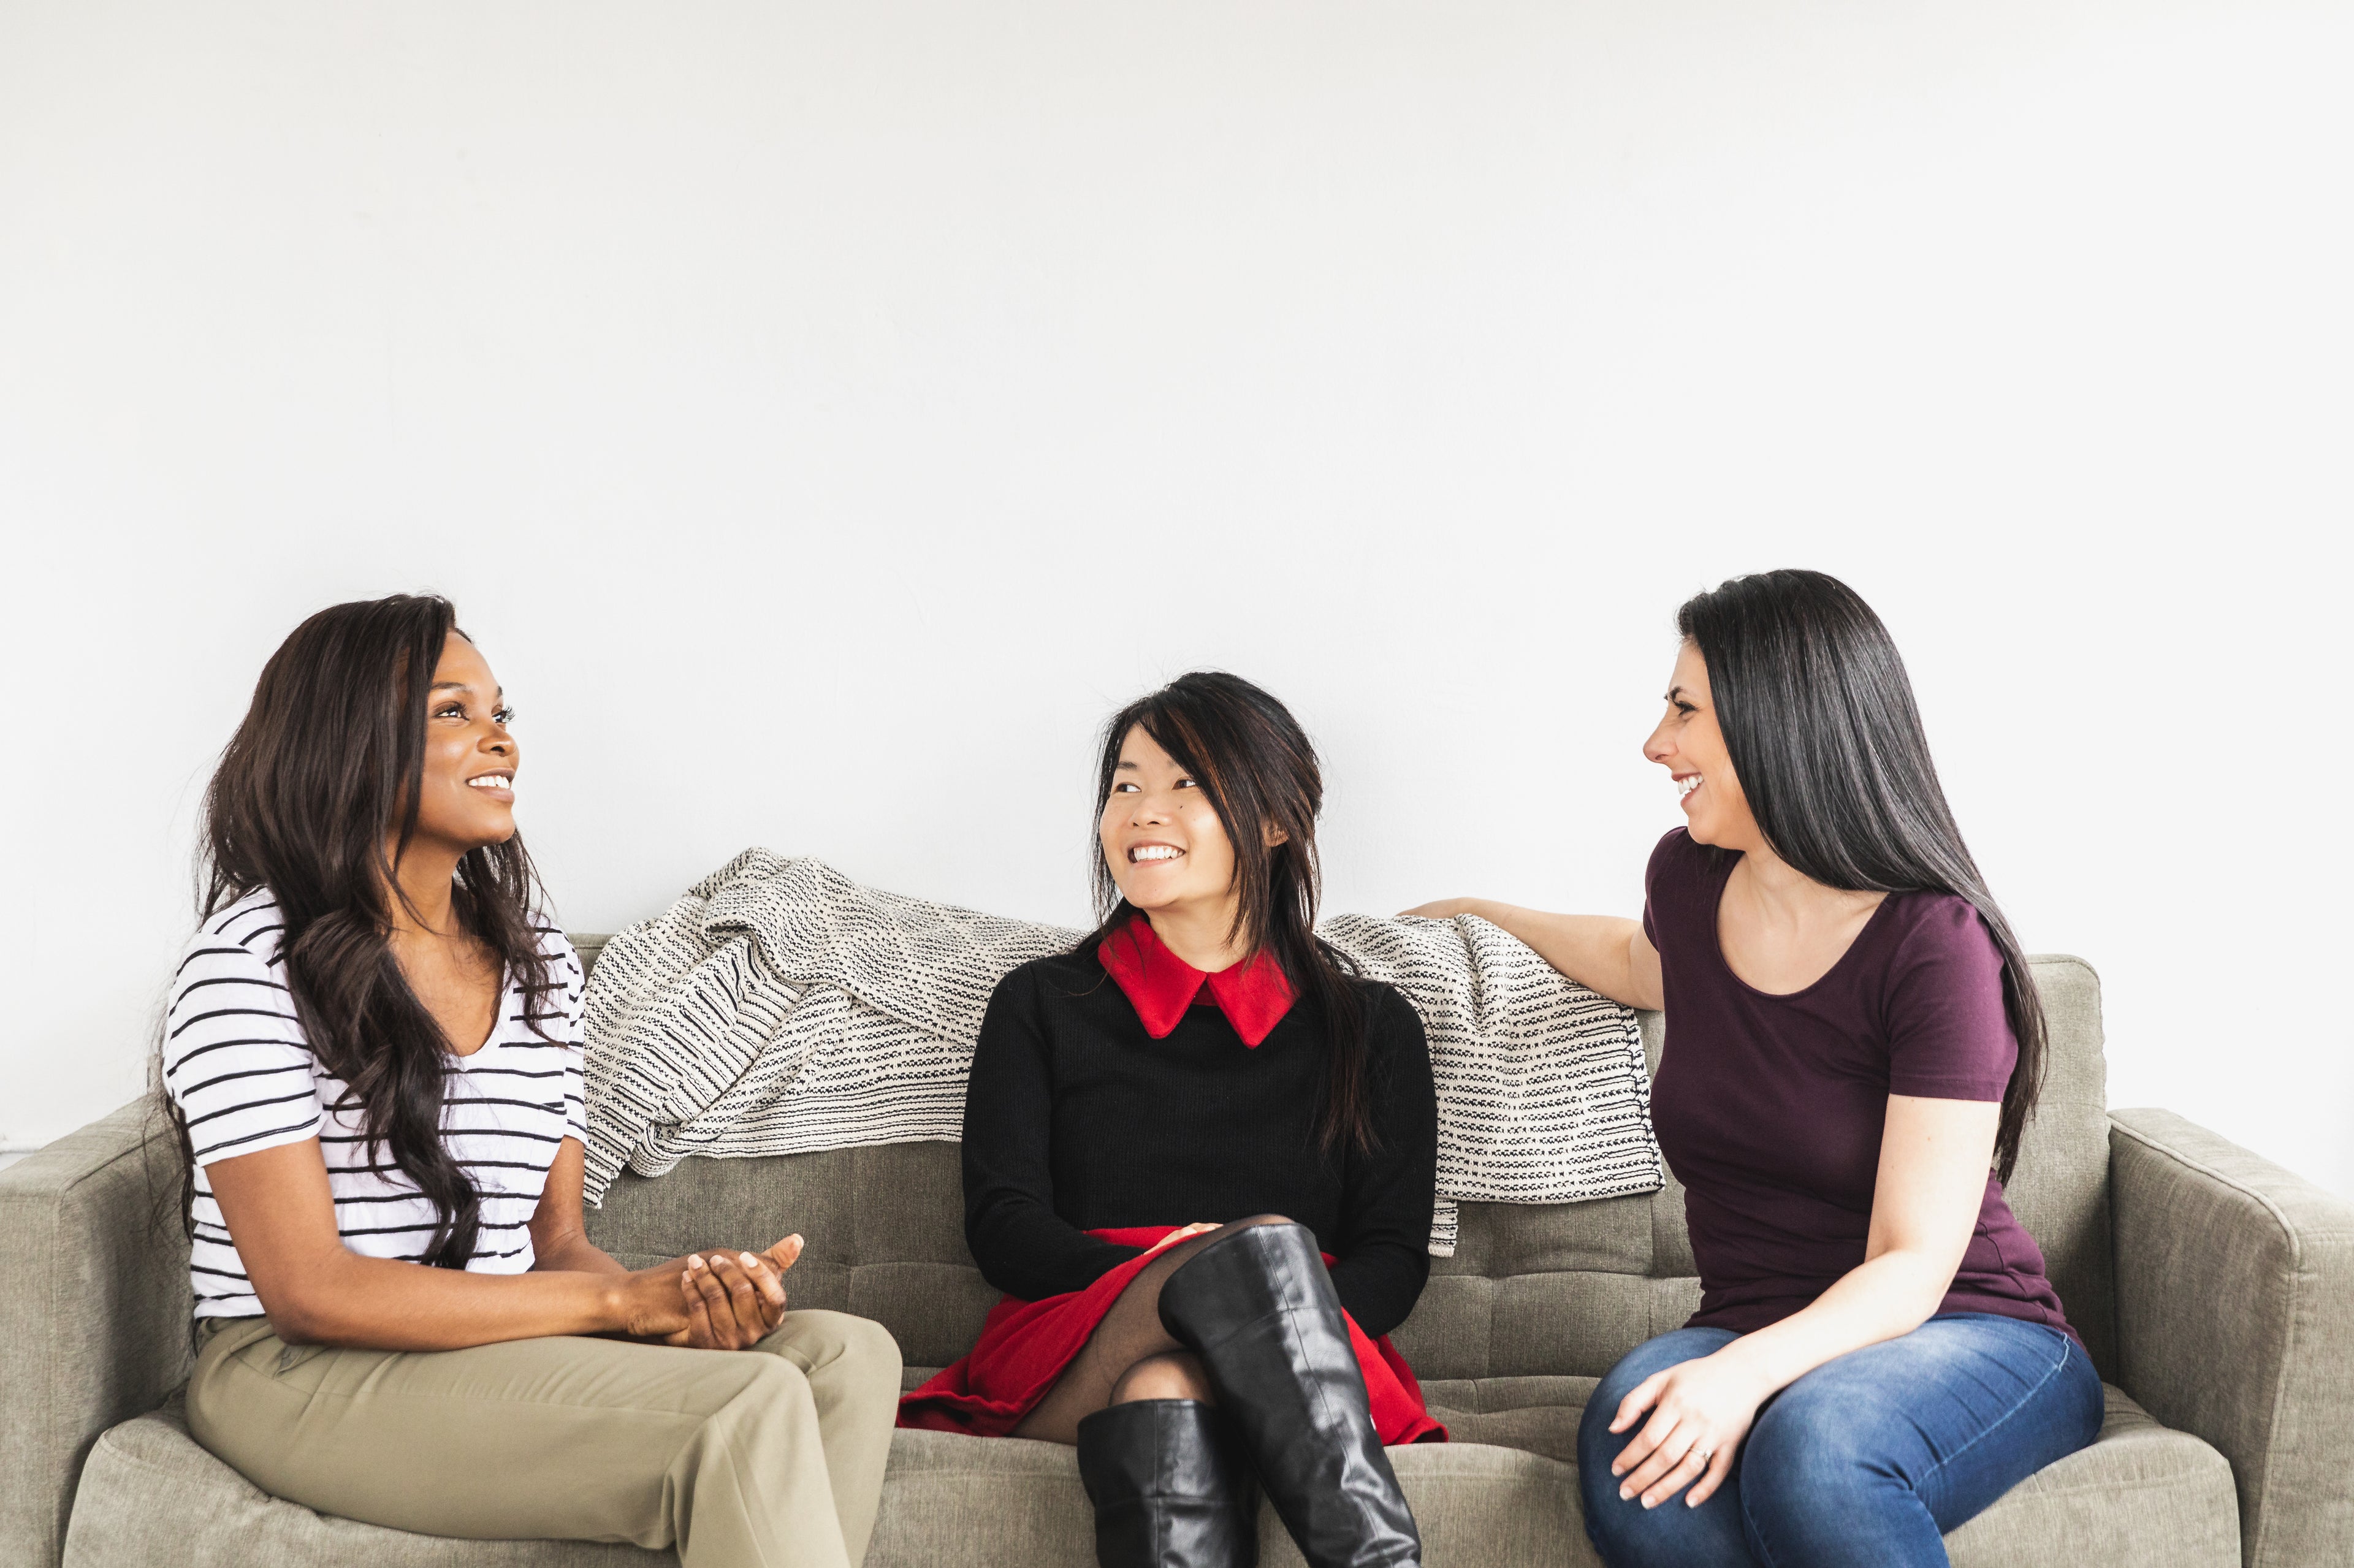 Three Models Share a Smile on a Grey Sofa | Kiicity.com